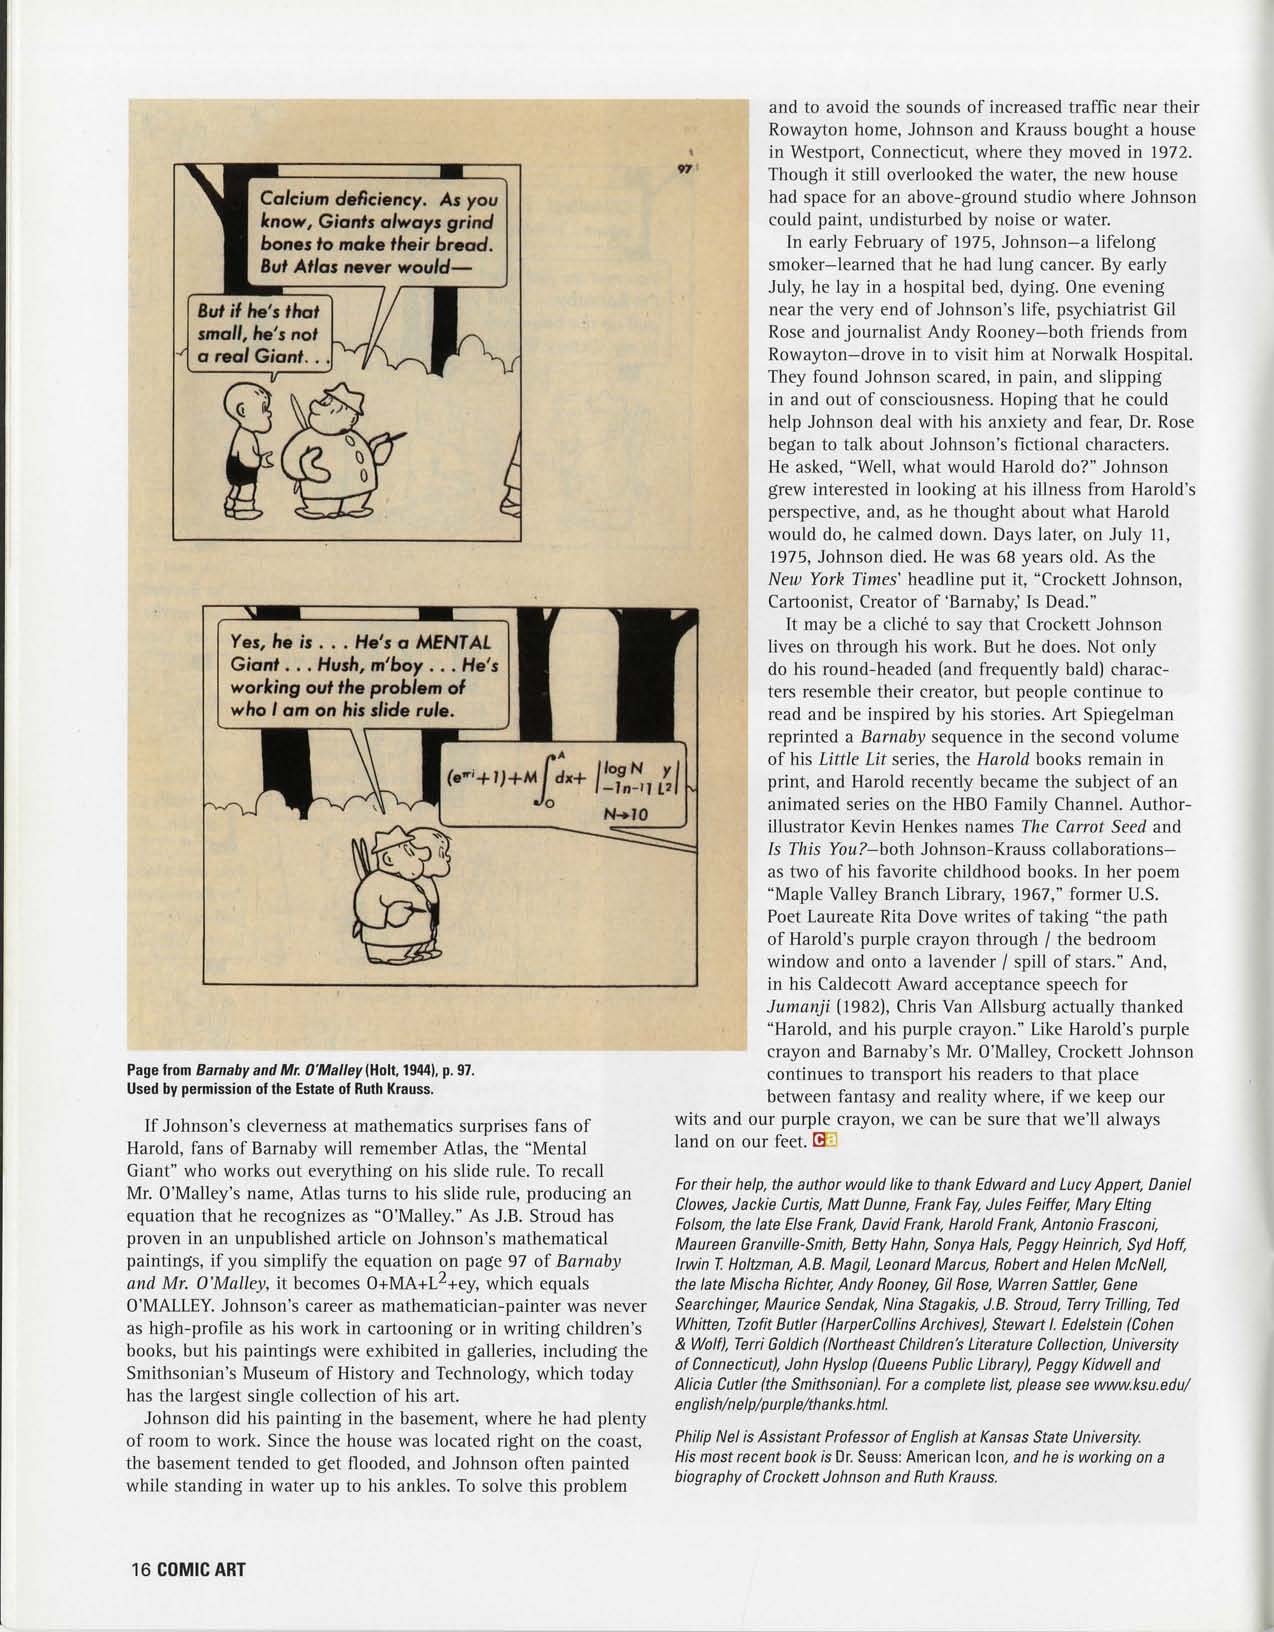 Philip Nel, "Crockett Johnson and the Purple Crayon: A Life in Art," Comic Art 5 (Winter 2004), p. 16